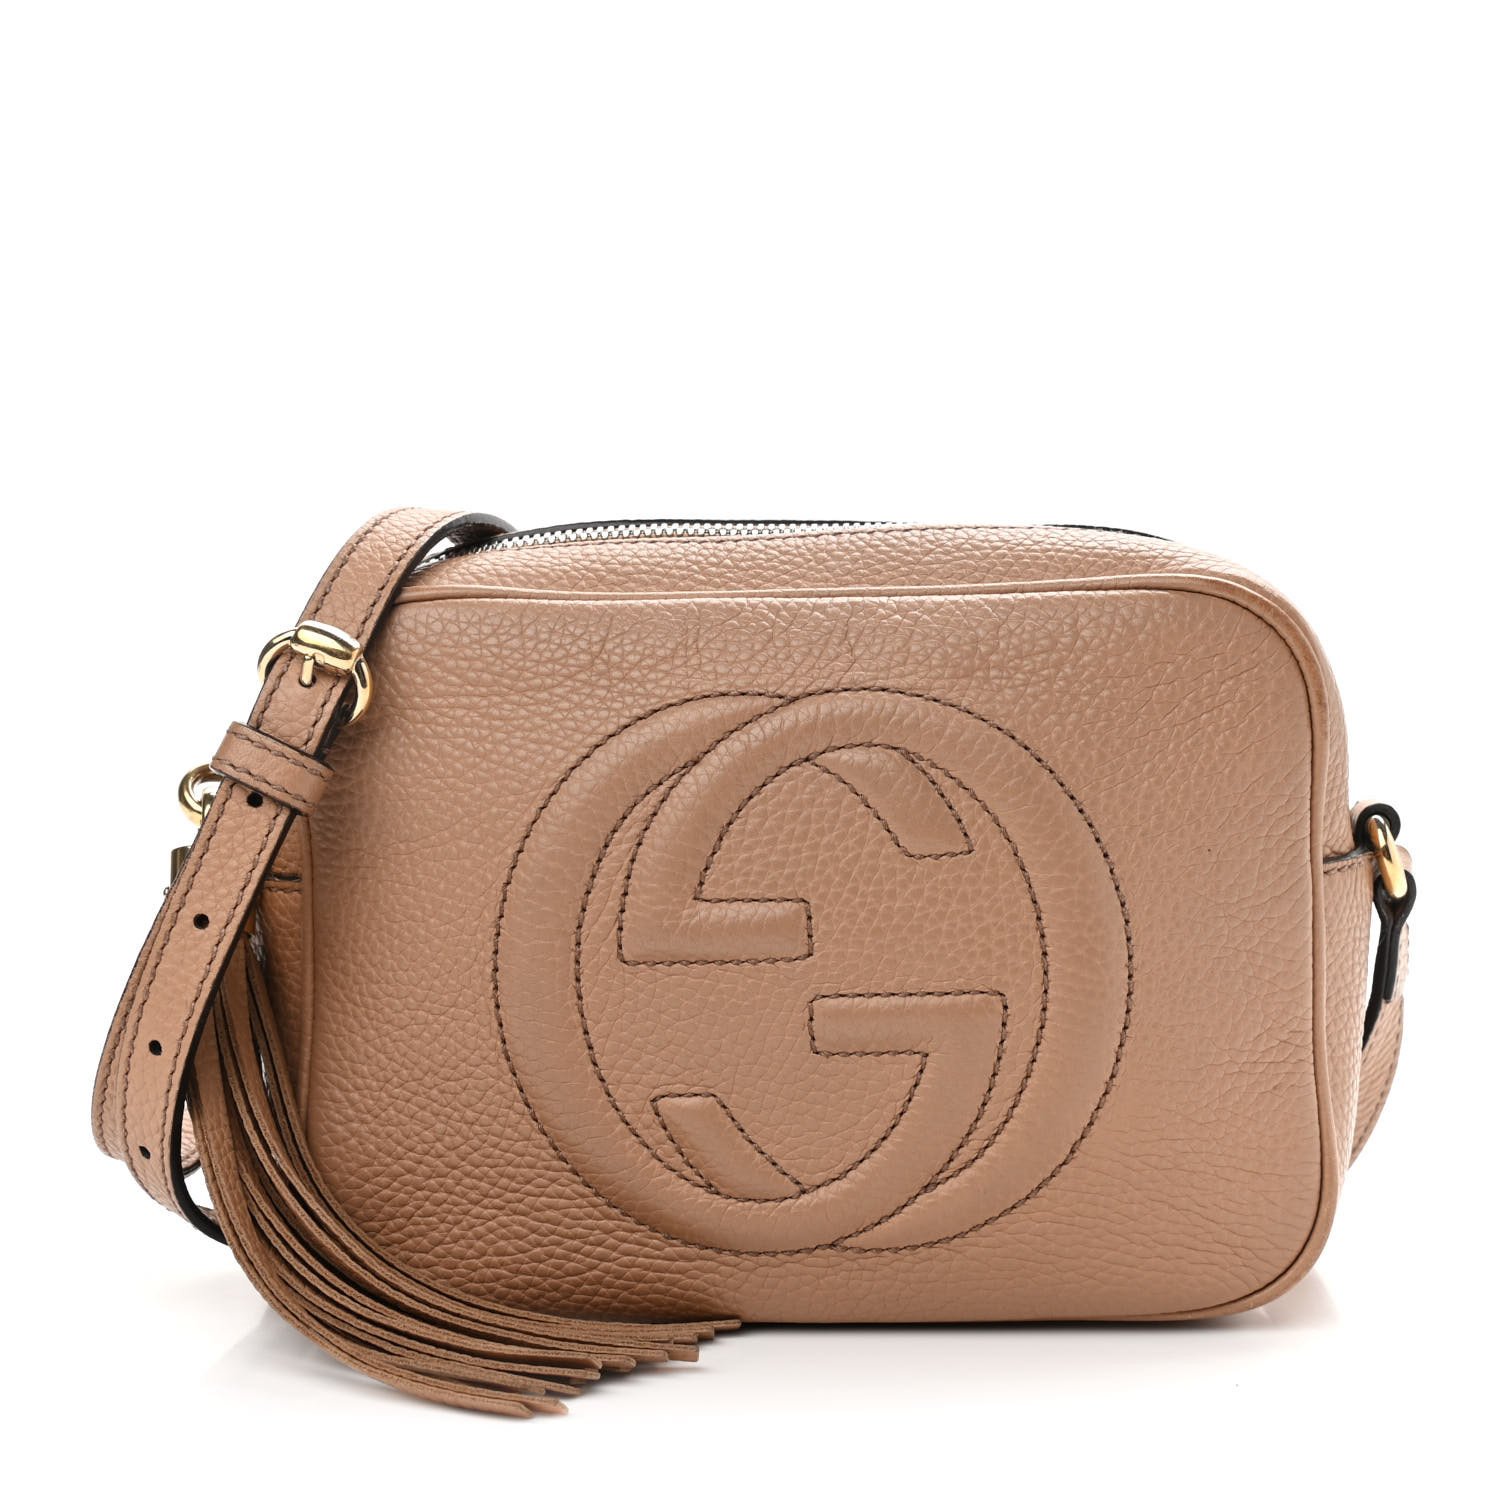 Best designer handbags under 1000 USD // Budget friendly high quality DESIGNER  bags 